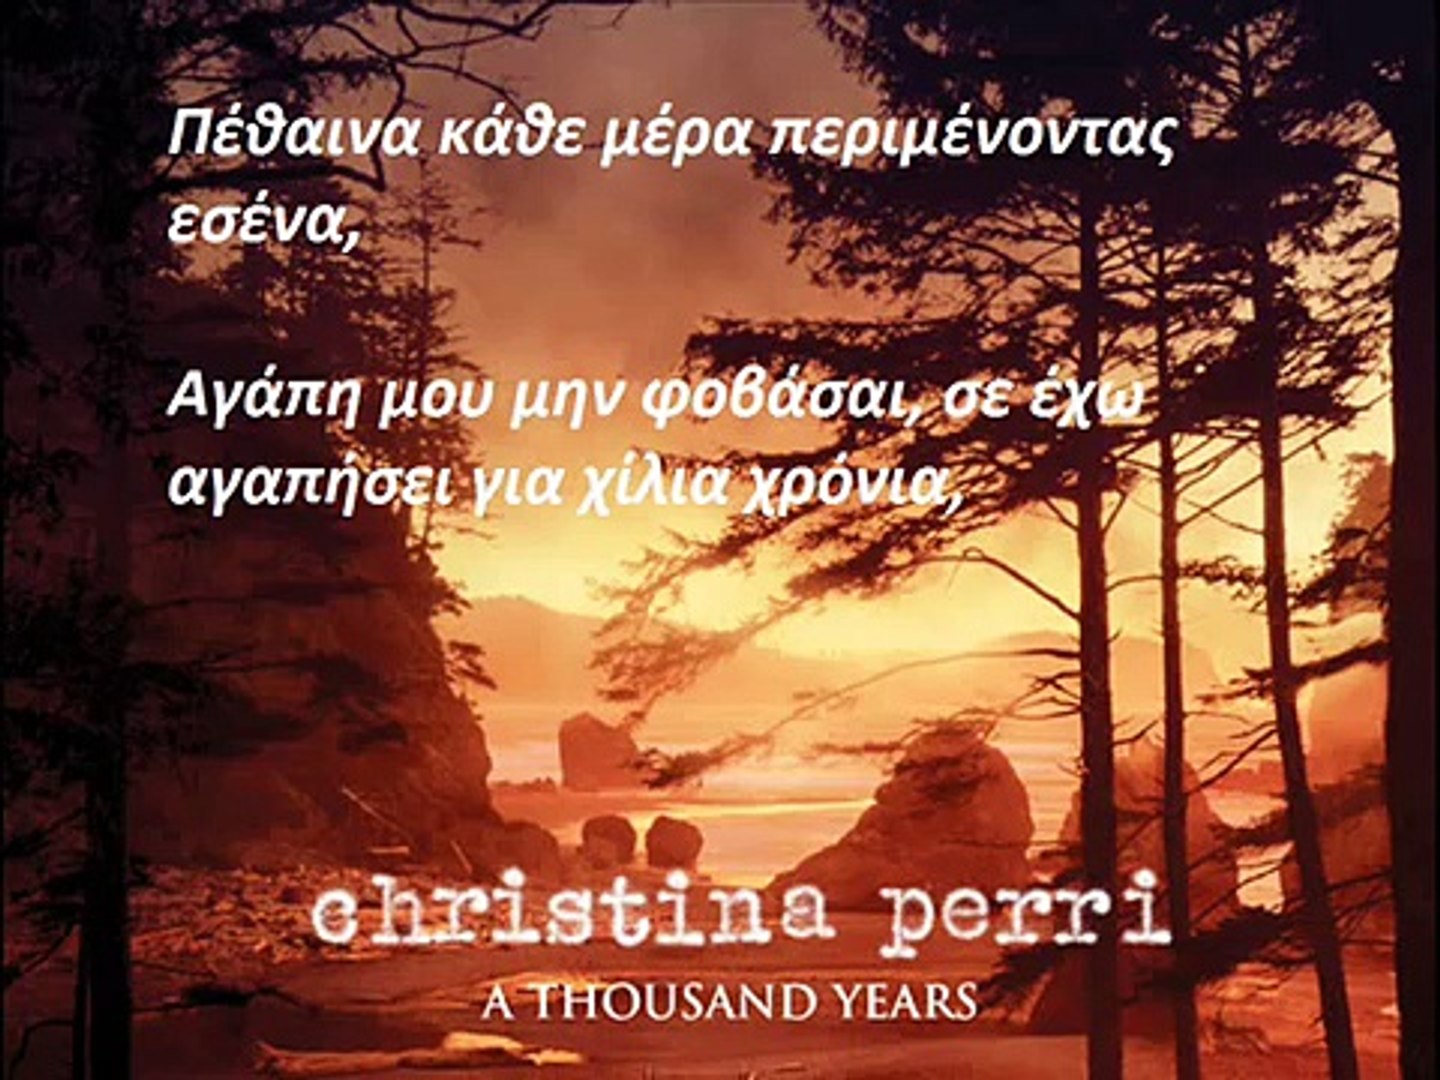 A THOUSAND YEARS (TRADUÇÃO) - Christina Perri 